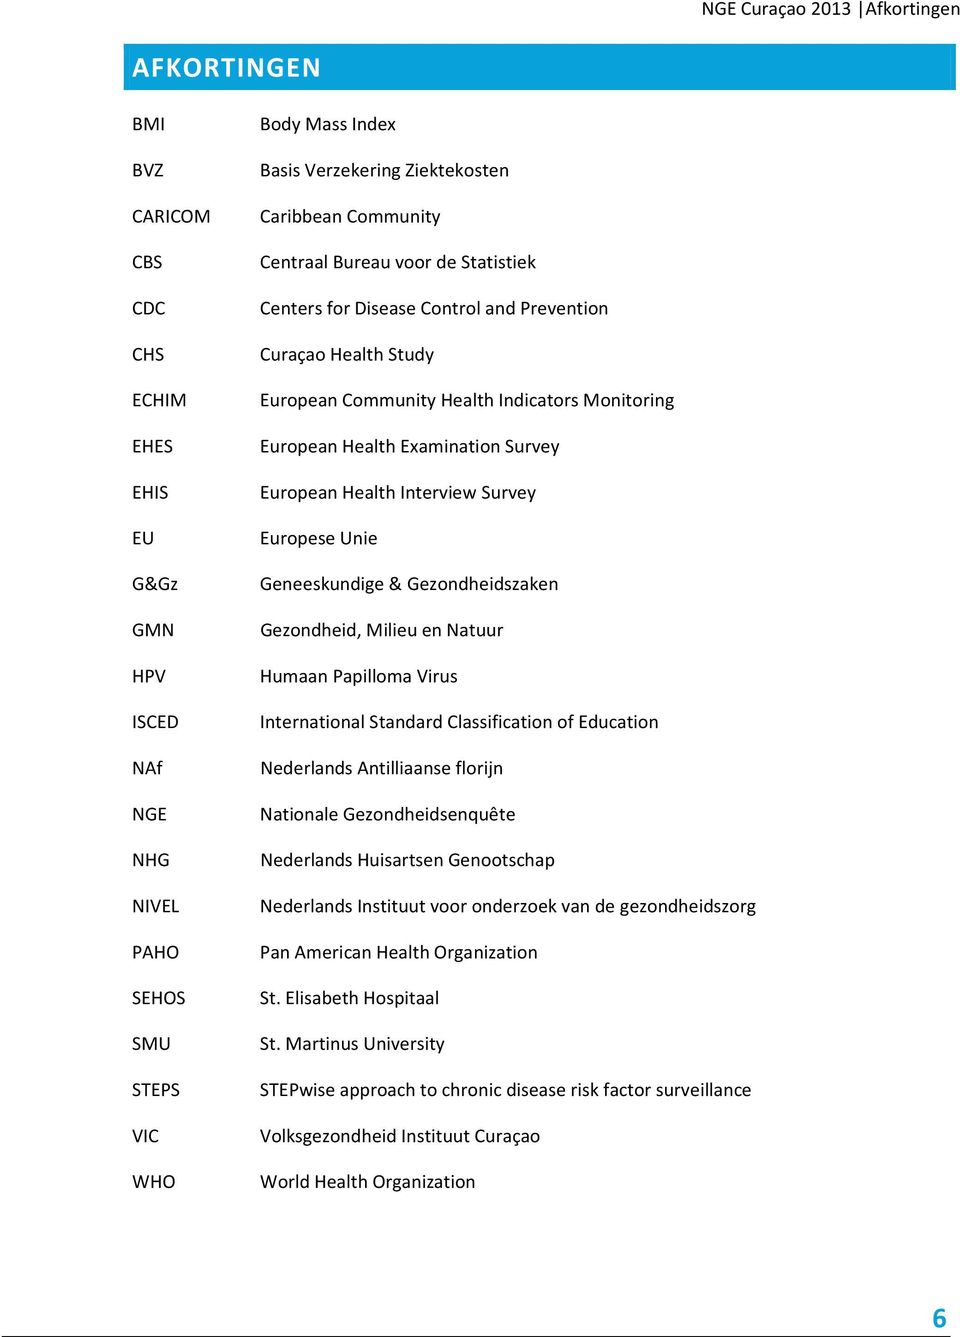 Examination Survey European Health Interview Survey Europese Unie Geneeskundige & Gezondheidszaken Gezondheid, Milieu en Natuur Humaan Papilloma Virus International Standard Classification of